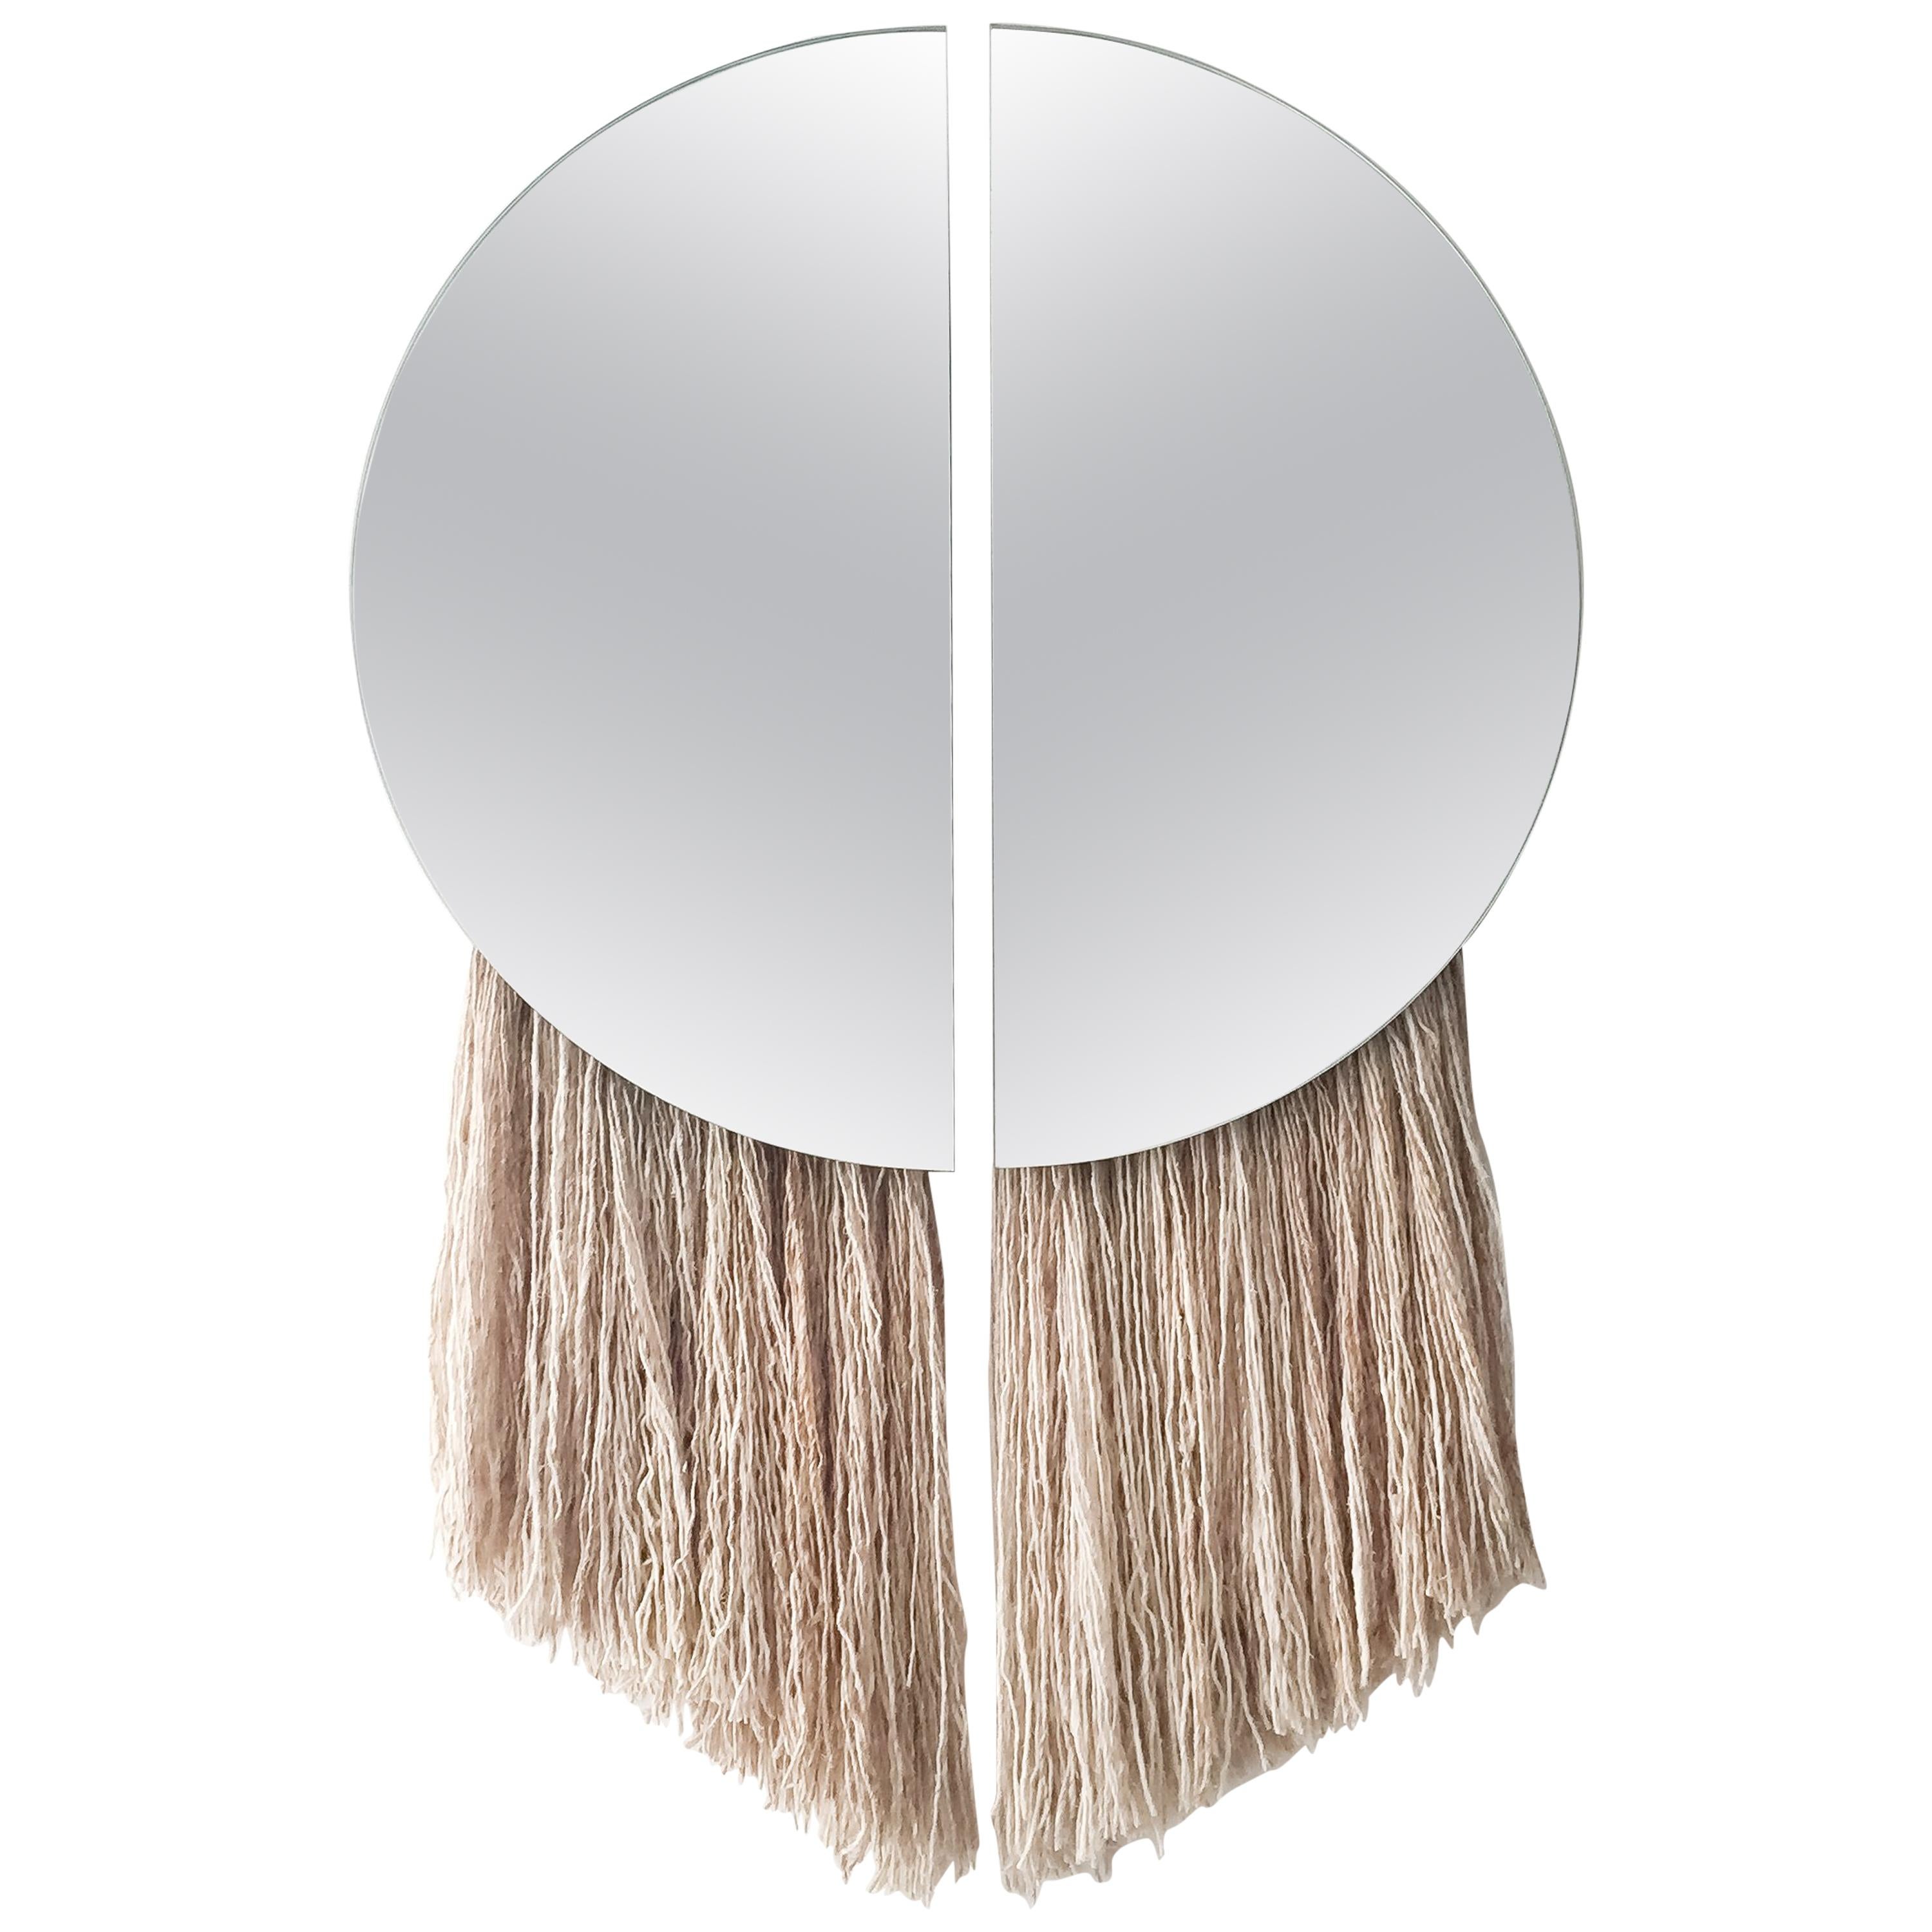 Silver Round Mirror with Fiber, Contemporary Apollo Mirror by Ben & Aja Blanc